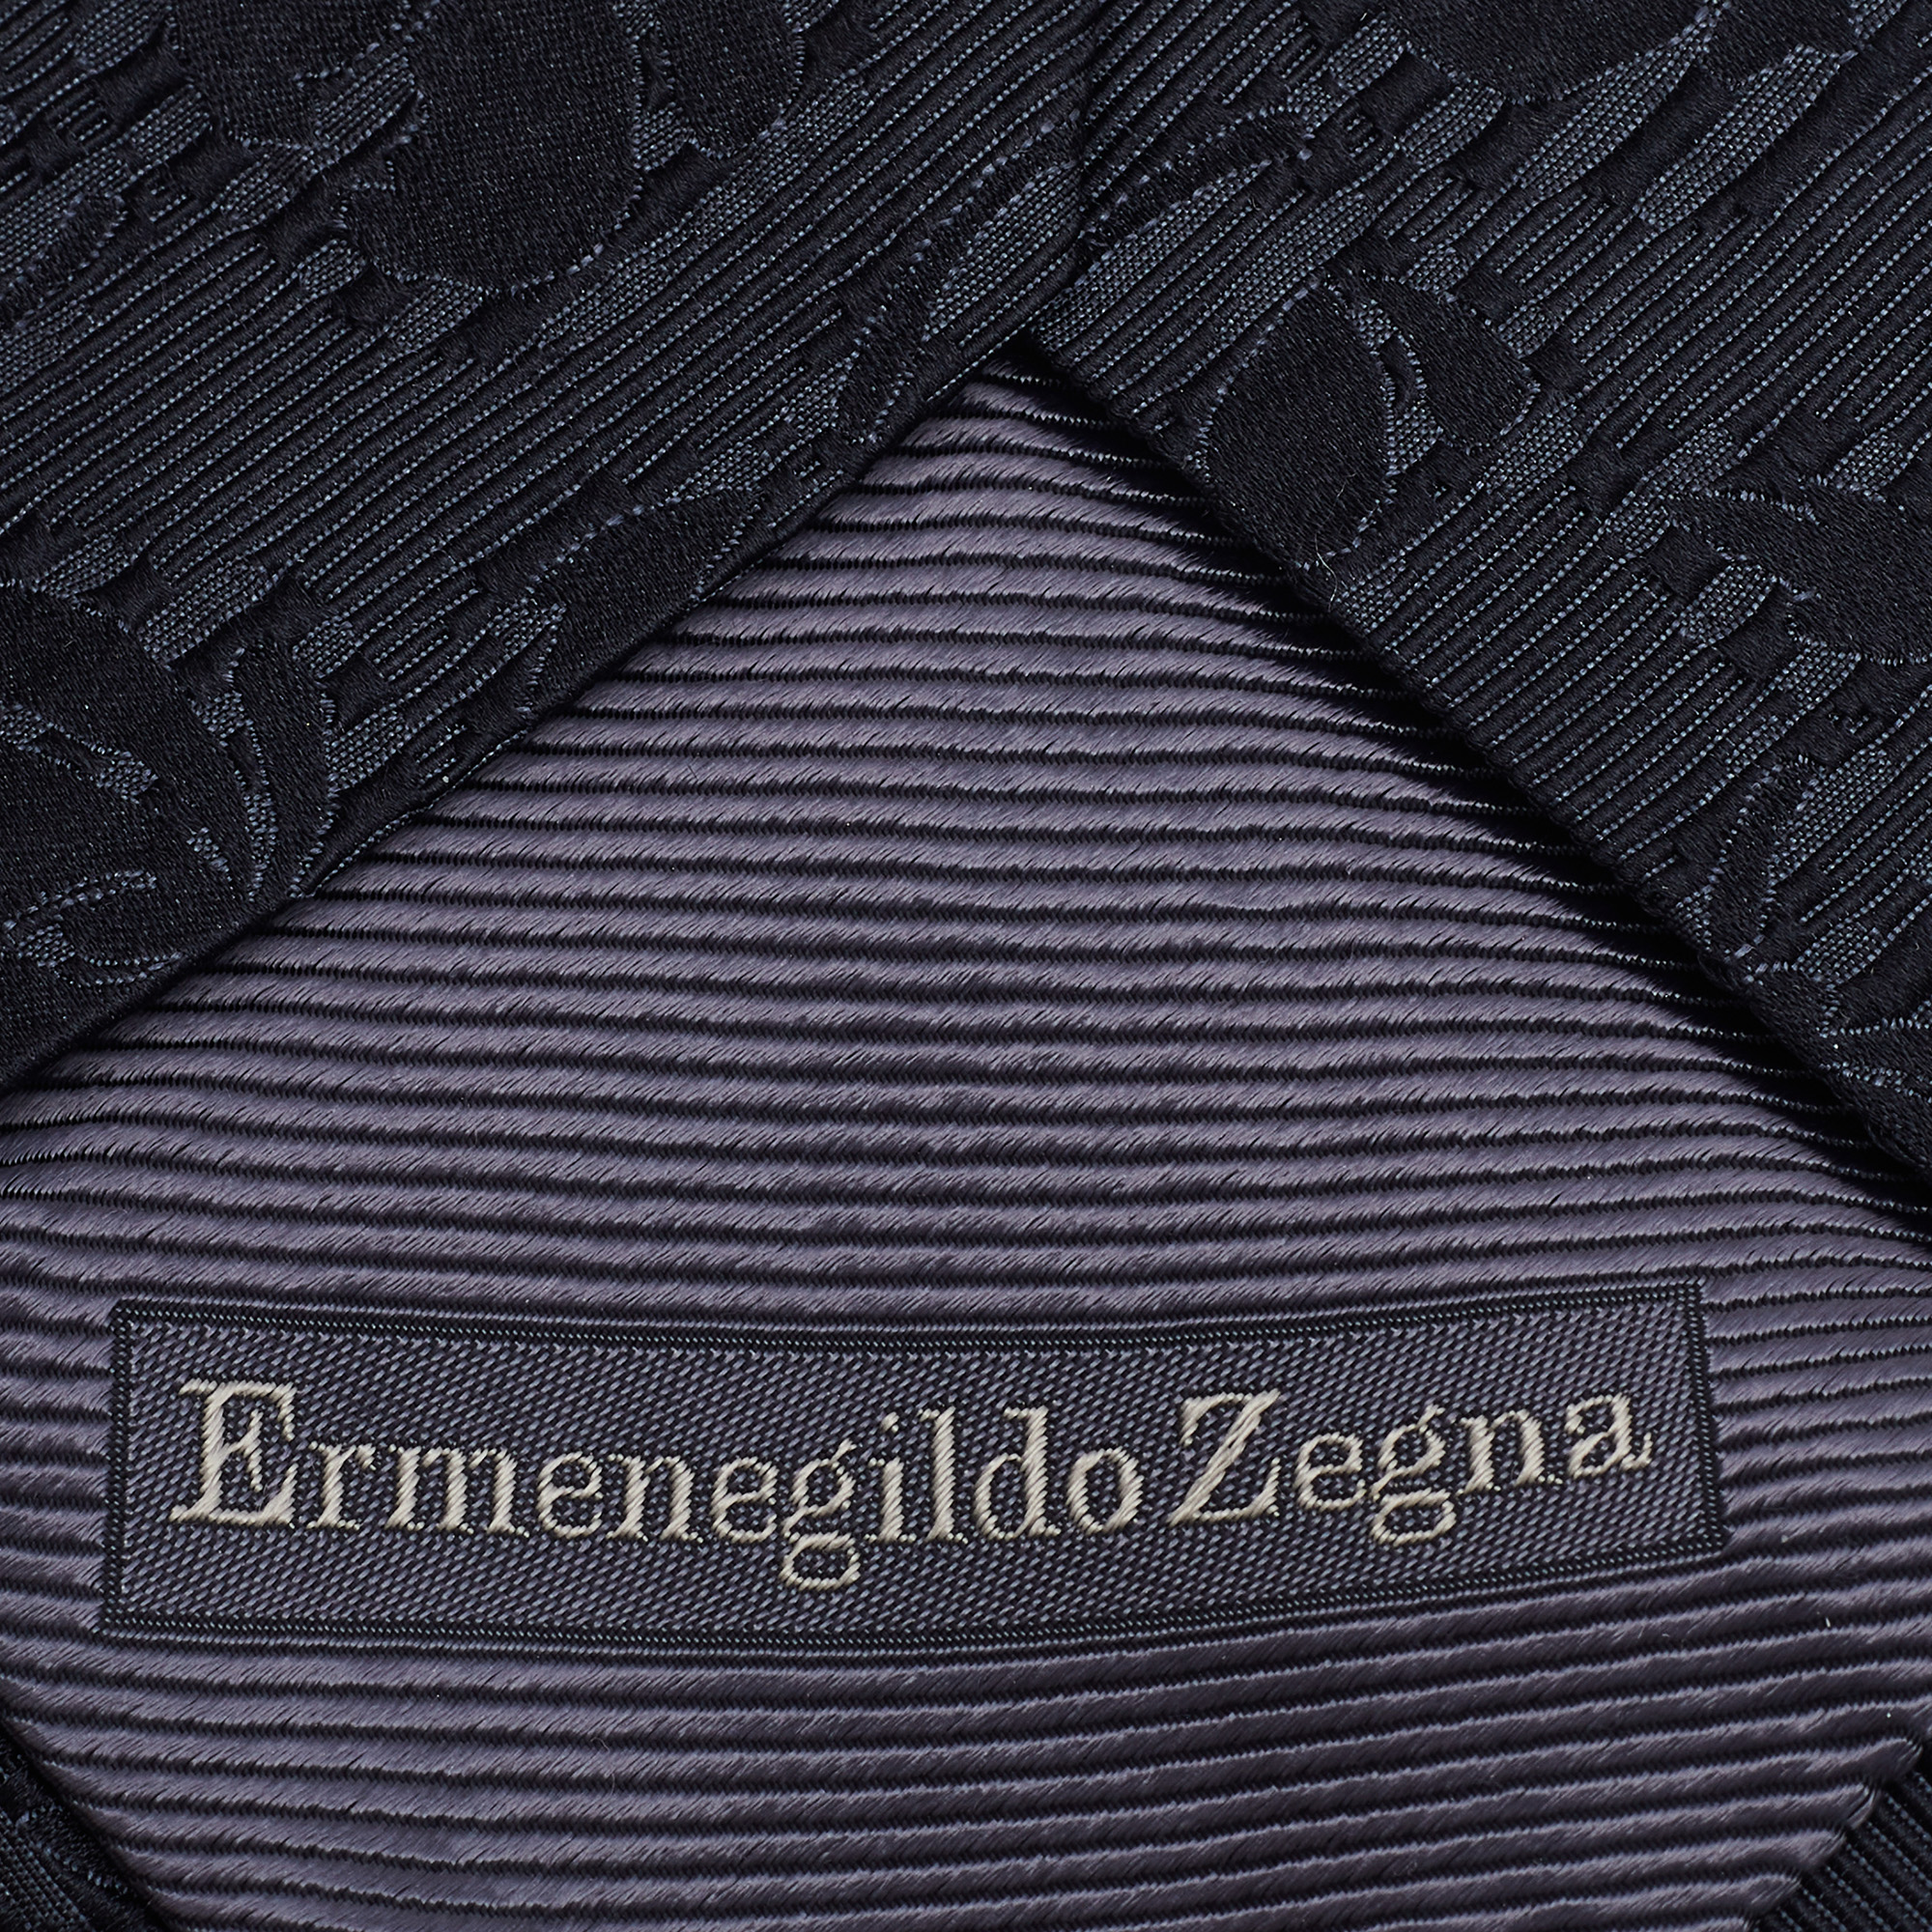 Ermenegildo Zegna Black Floral Jacquard Tie